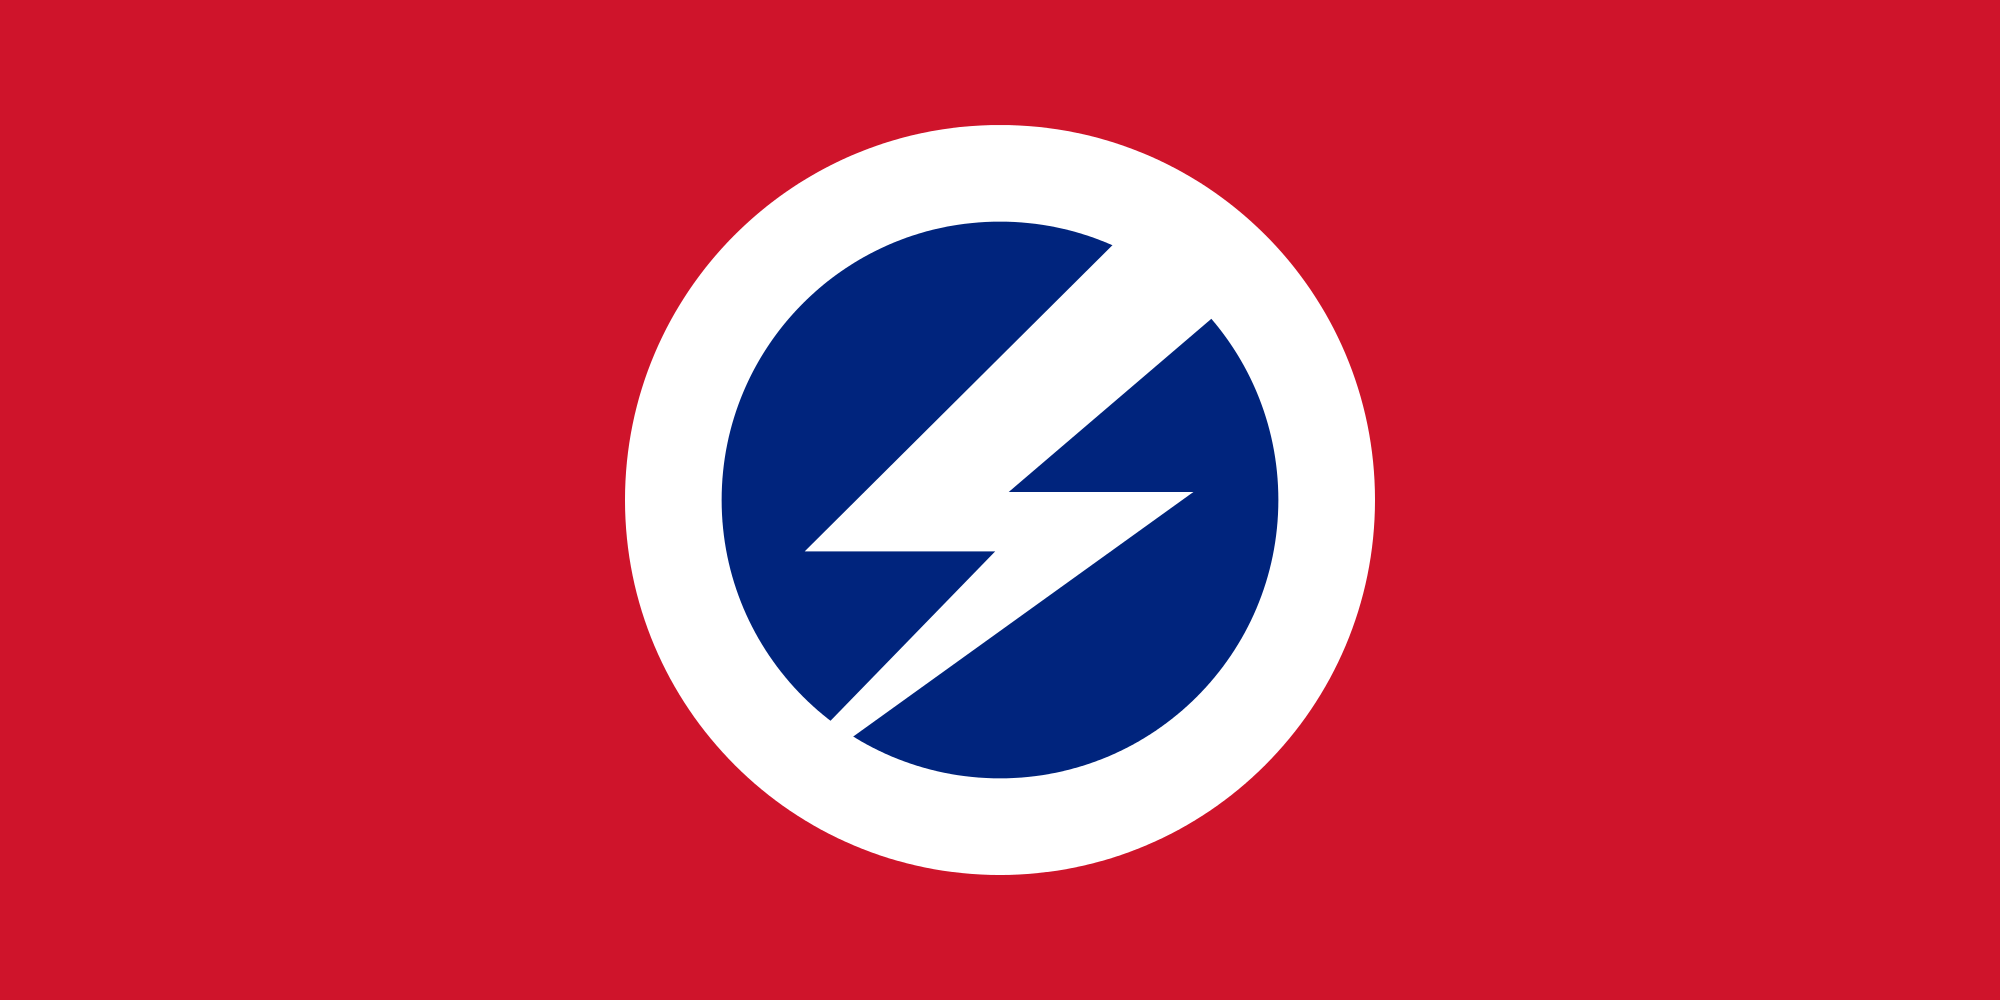 Fascism Logo - Guide to Far-Right Symbols | Brighton Anti-fascists